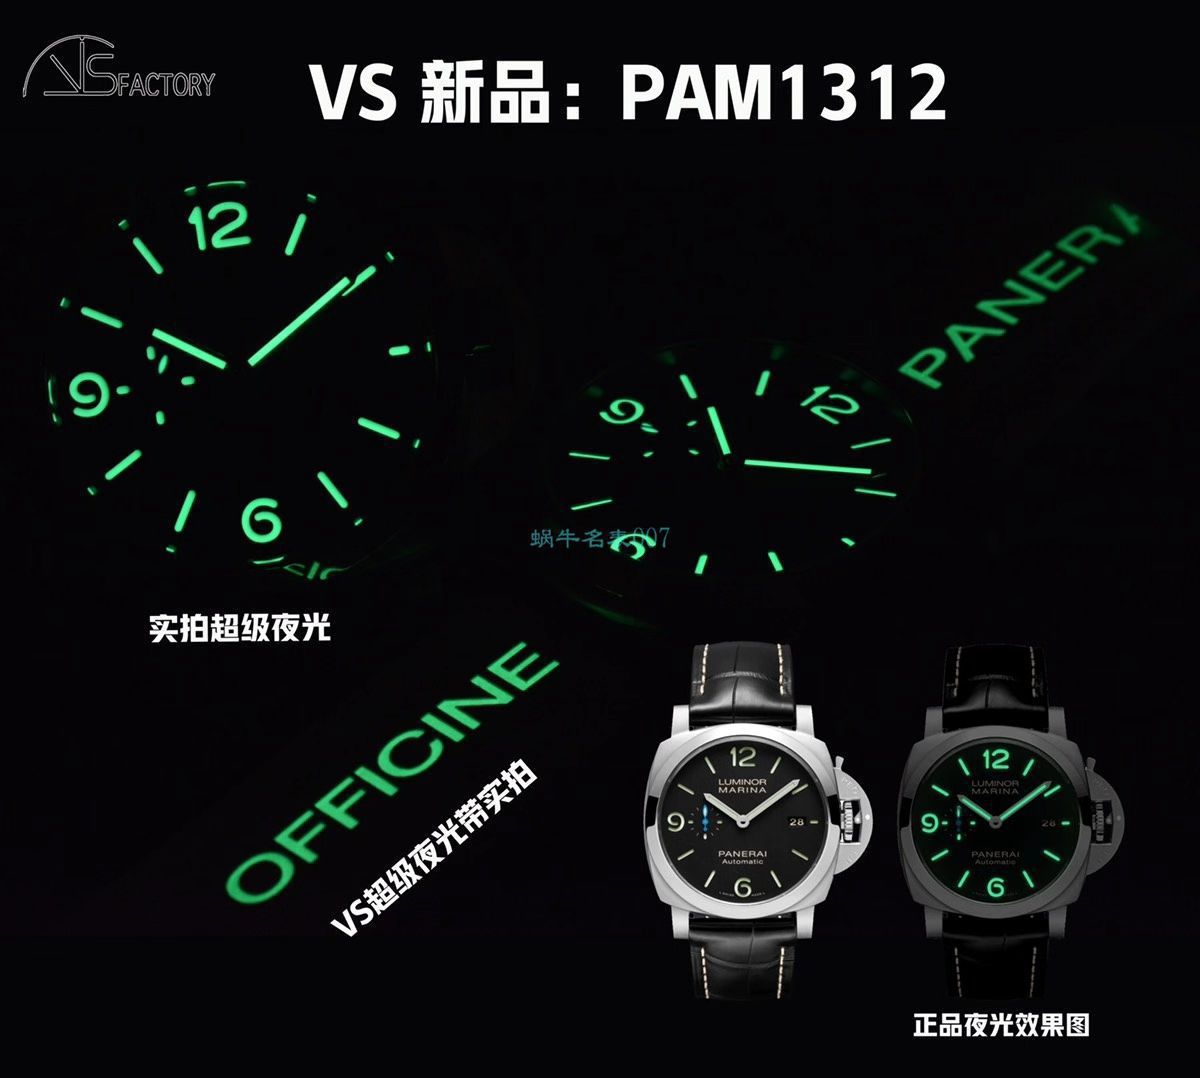 VS厂沛纳海一比一超A高仿手表PAM1312 LUMINOR系列PAM01312腕表 / VSPAM01312